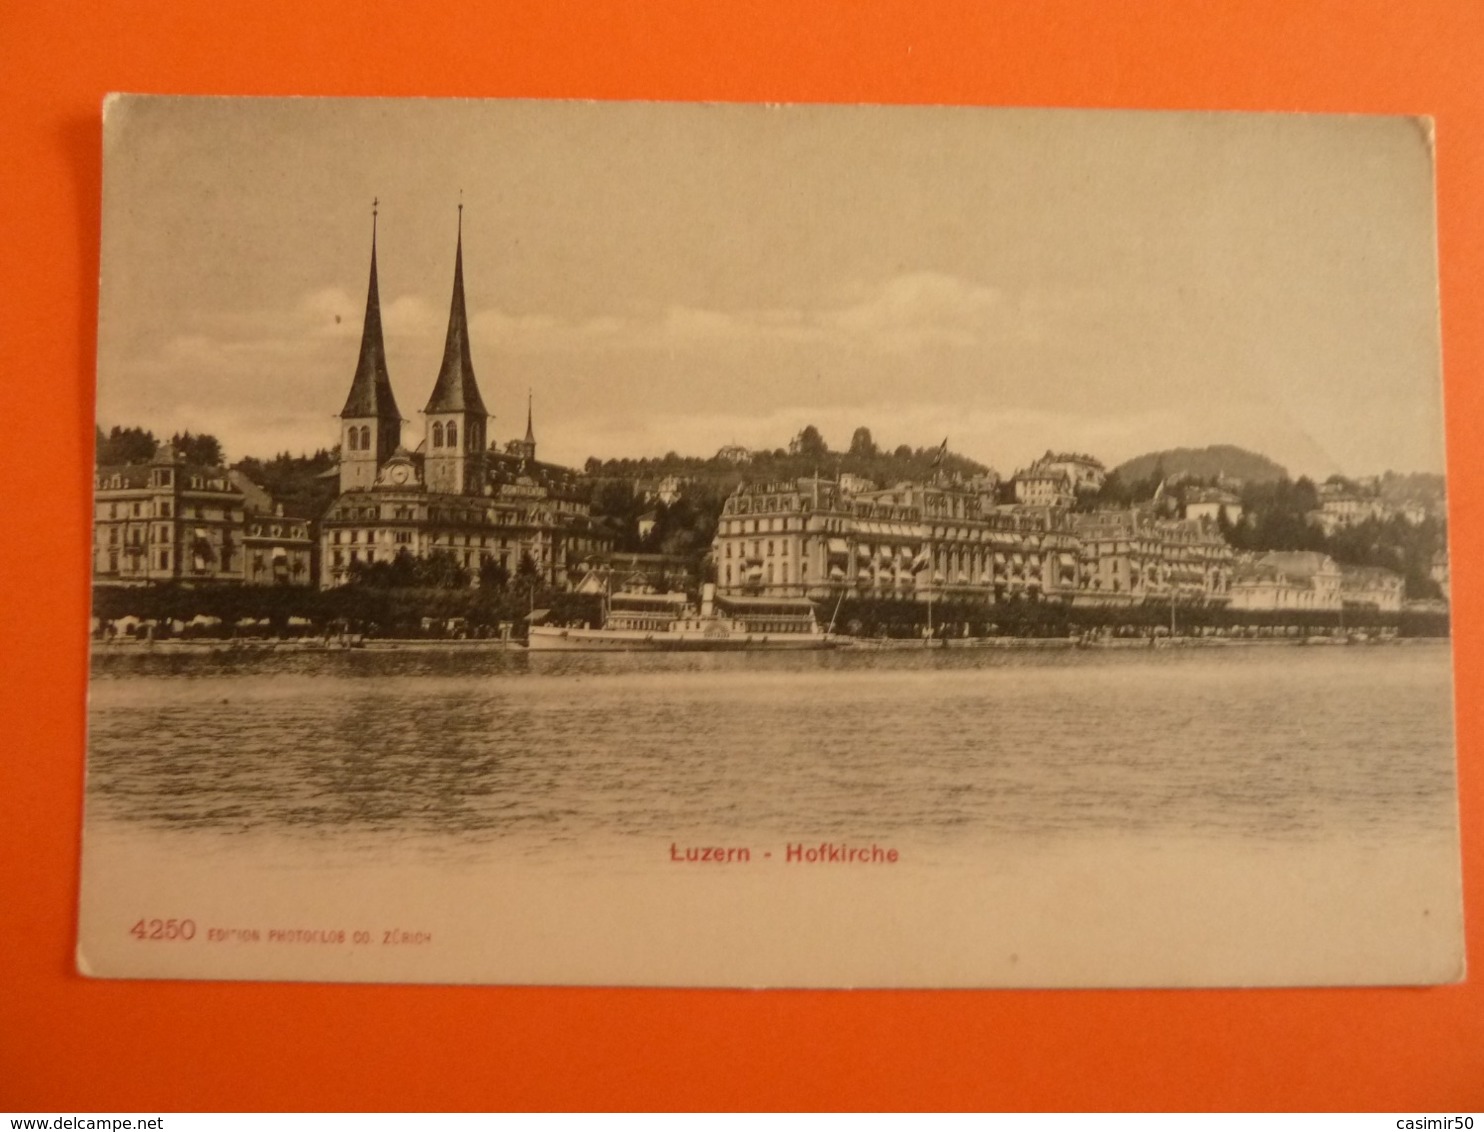 LUZERN HOFKIRCHE - Luzern